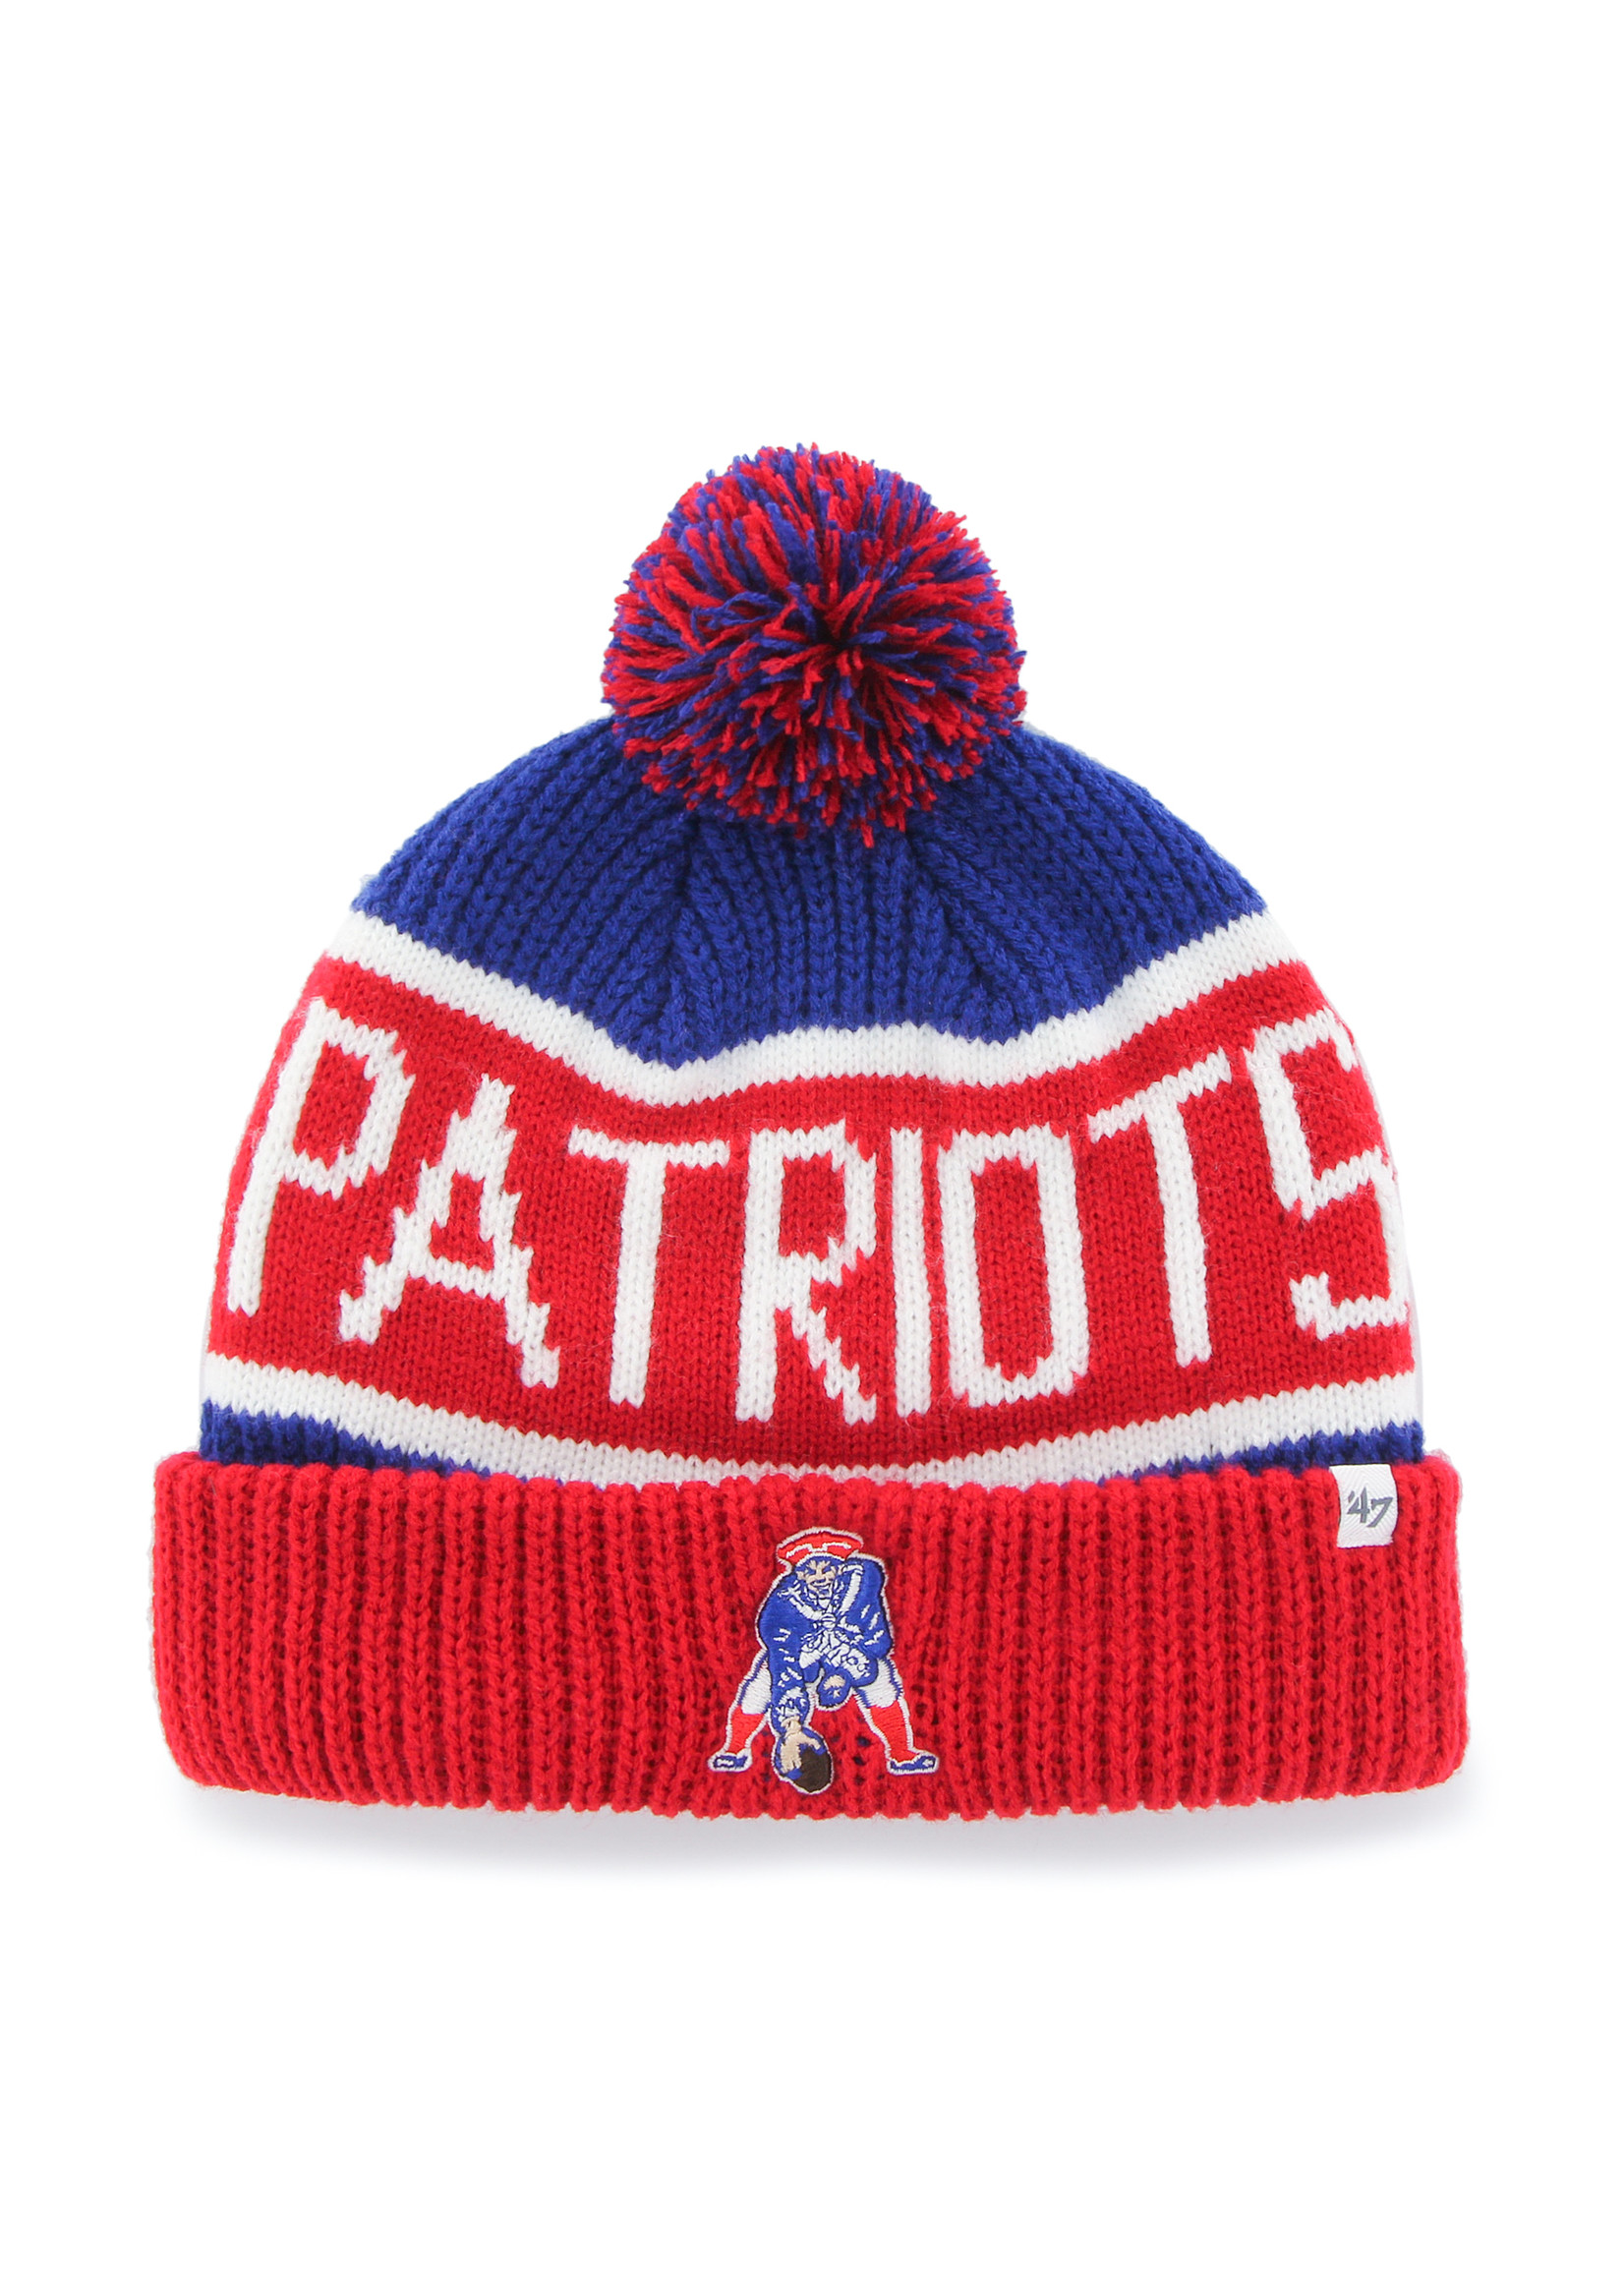 '47 Brand Patriots Winter Hat - Throwback Pom Pom